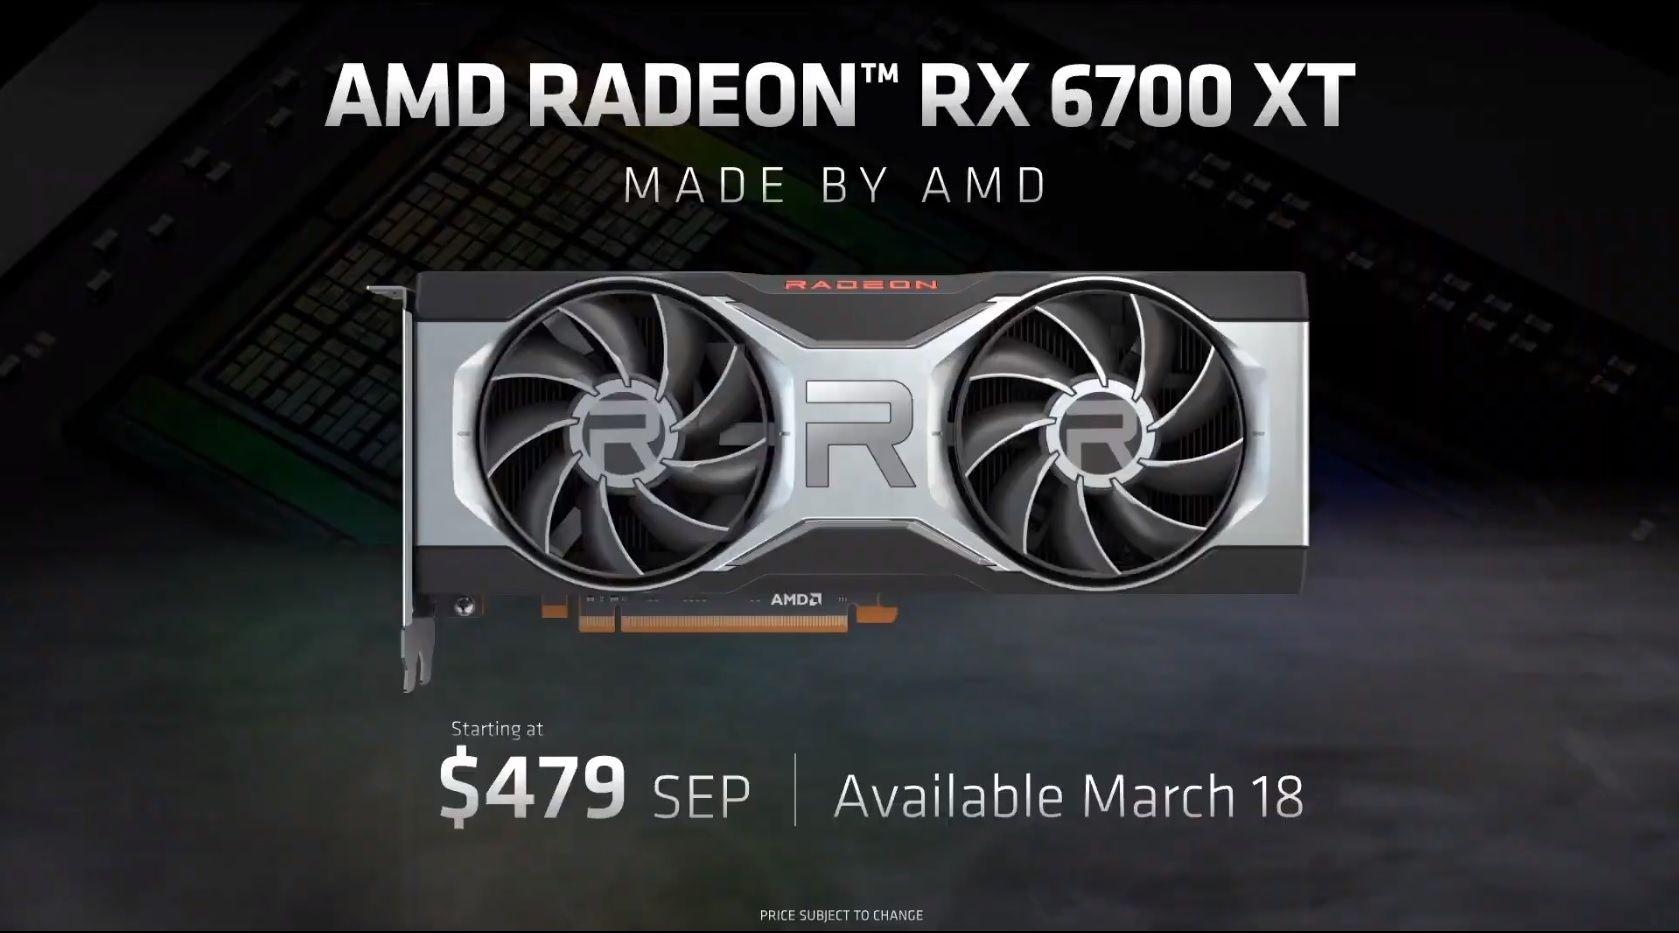 AMD Radeon RX 6700 XT disponibilite prix